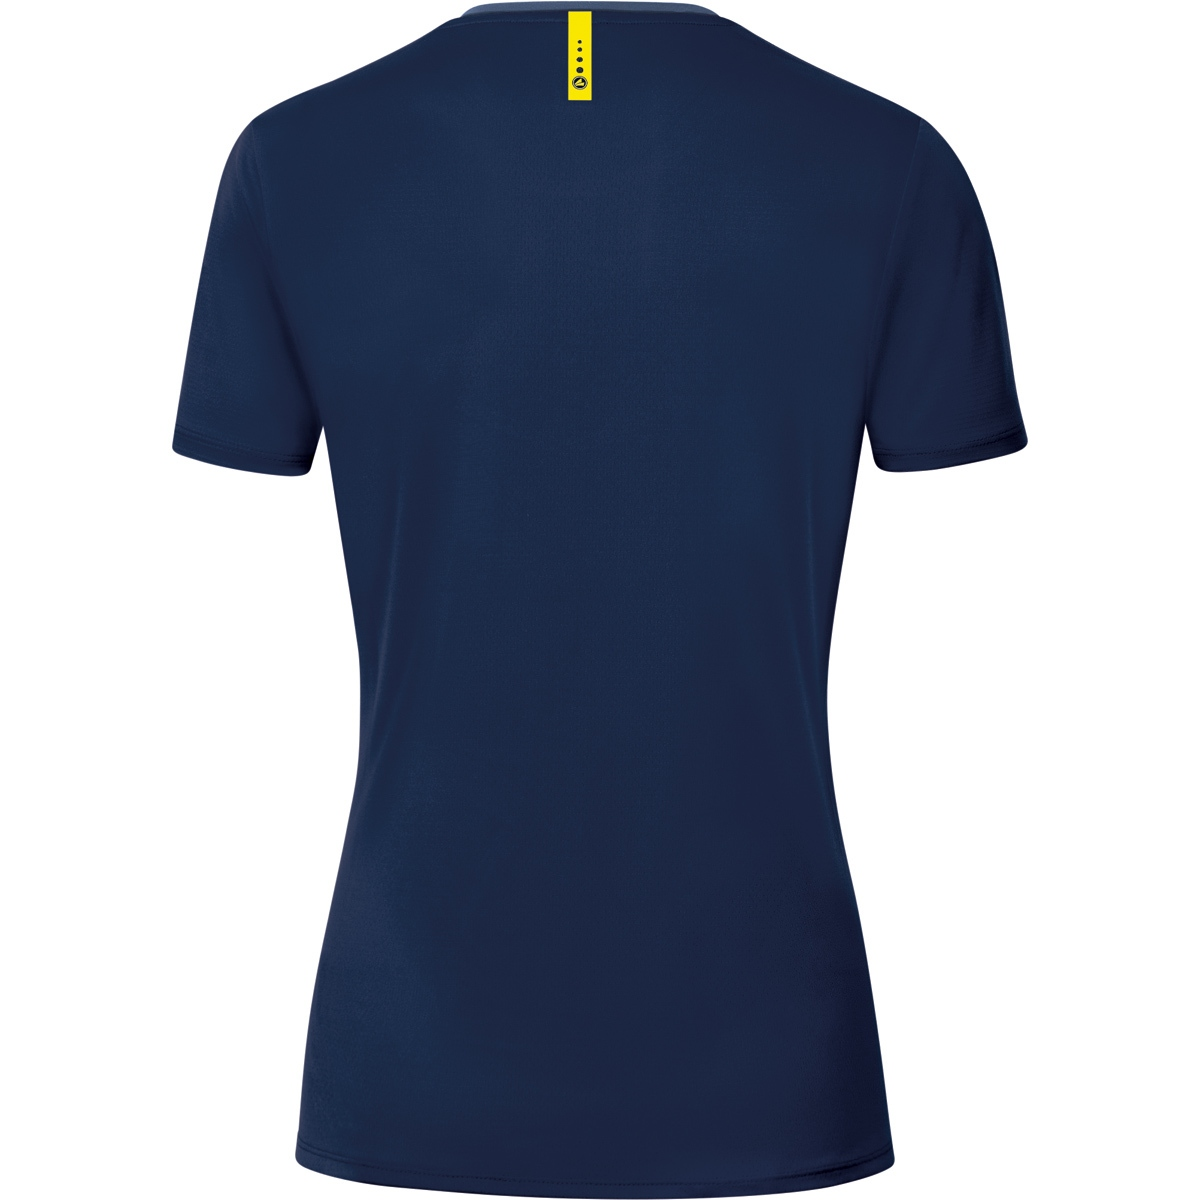 Champ Damen, 2.0 6120 T-Shirt JAKO Gr. 42, marine/darkblue/neongelb,